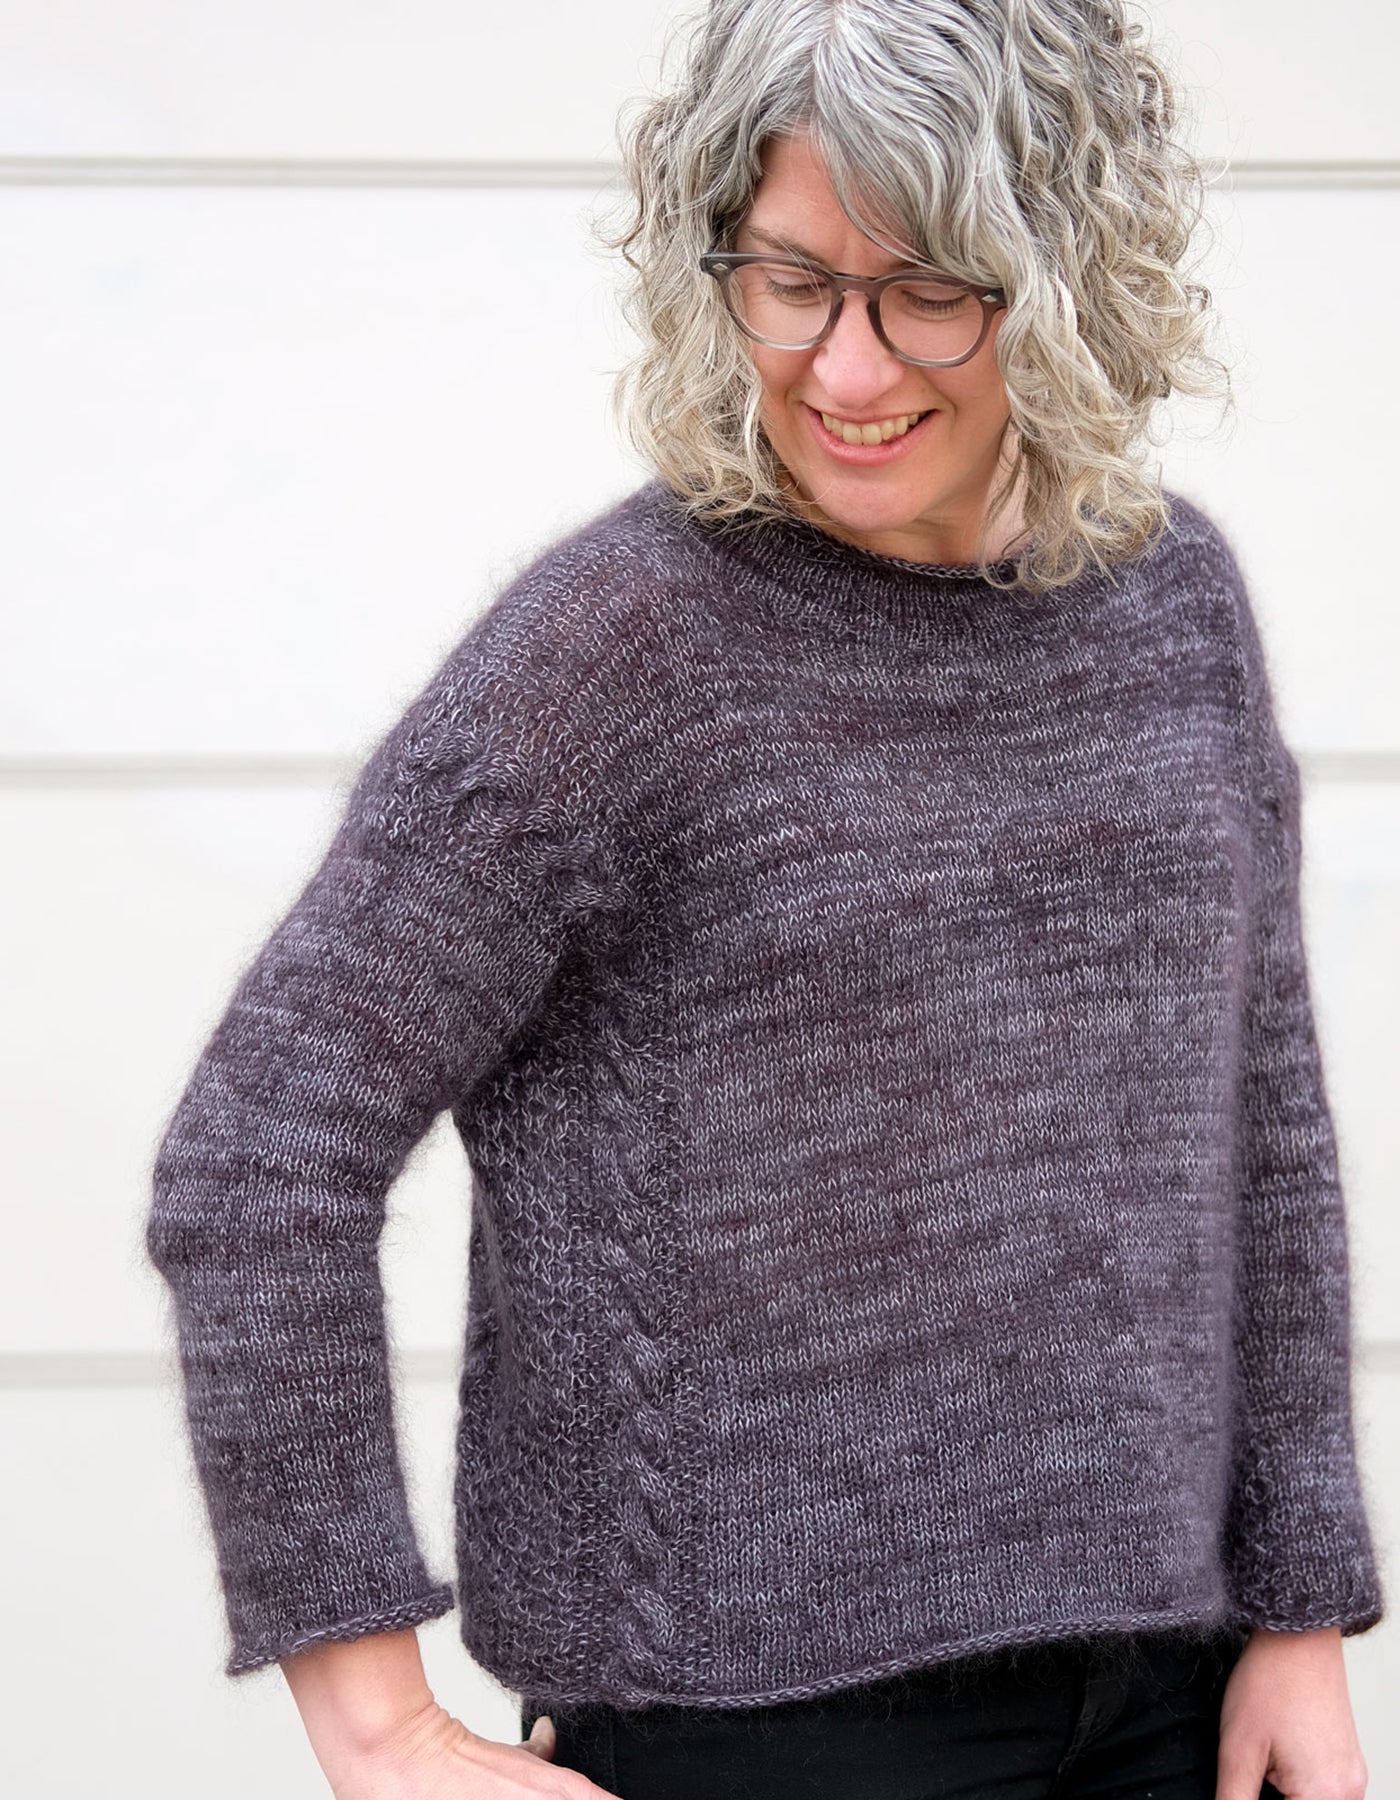 Jaime in her handknit marled yarn soiree sweater